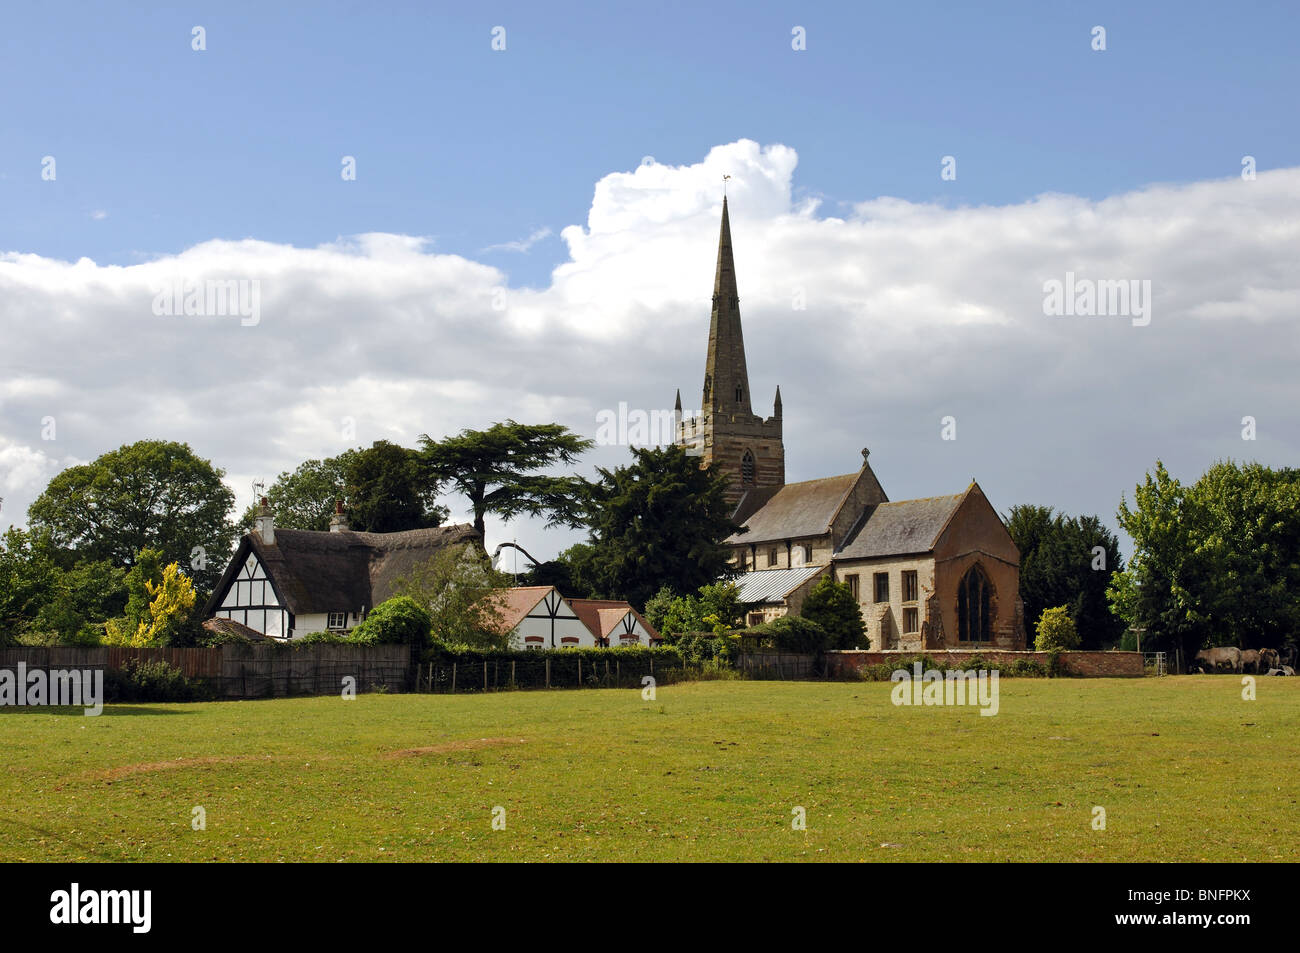 All Saints Church, Ladbroke, Warwickshire, England, UK Banque D'Images